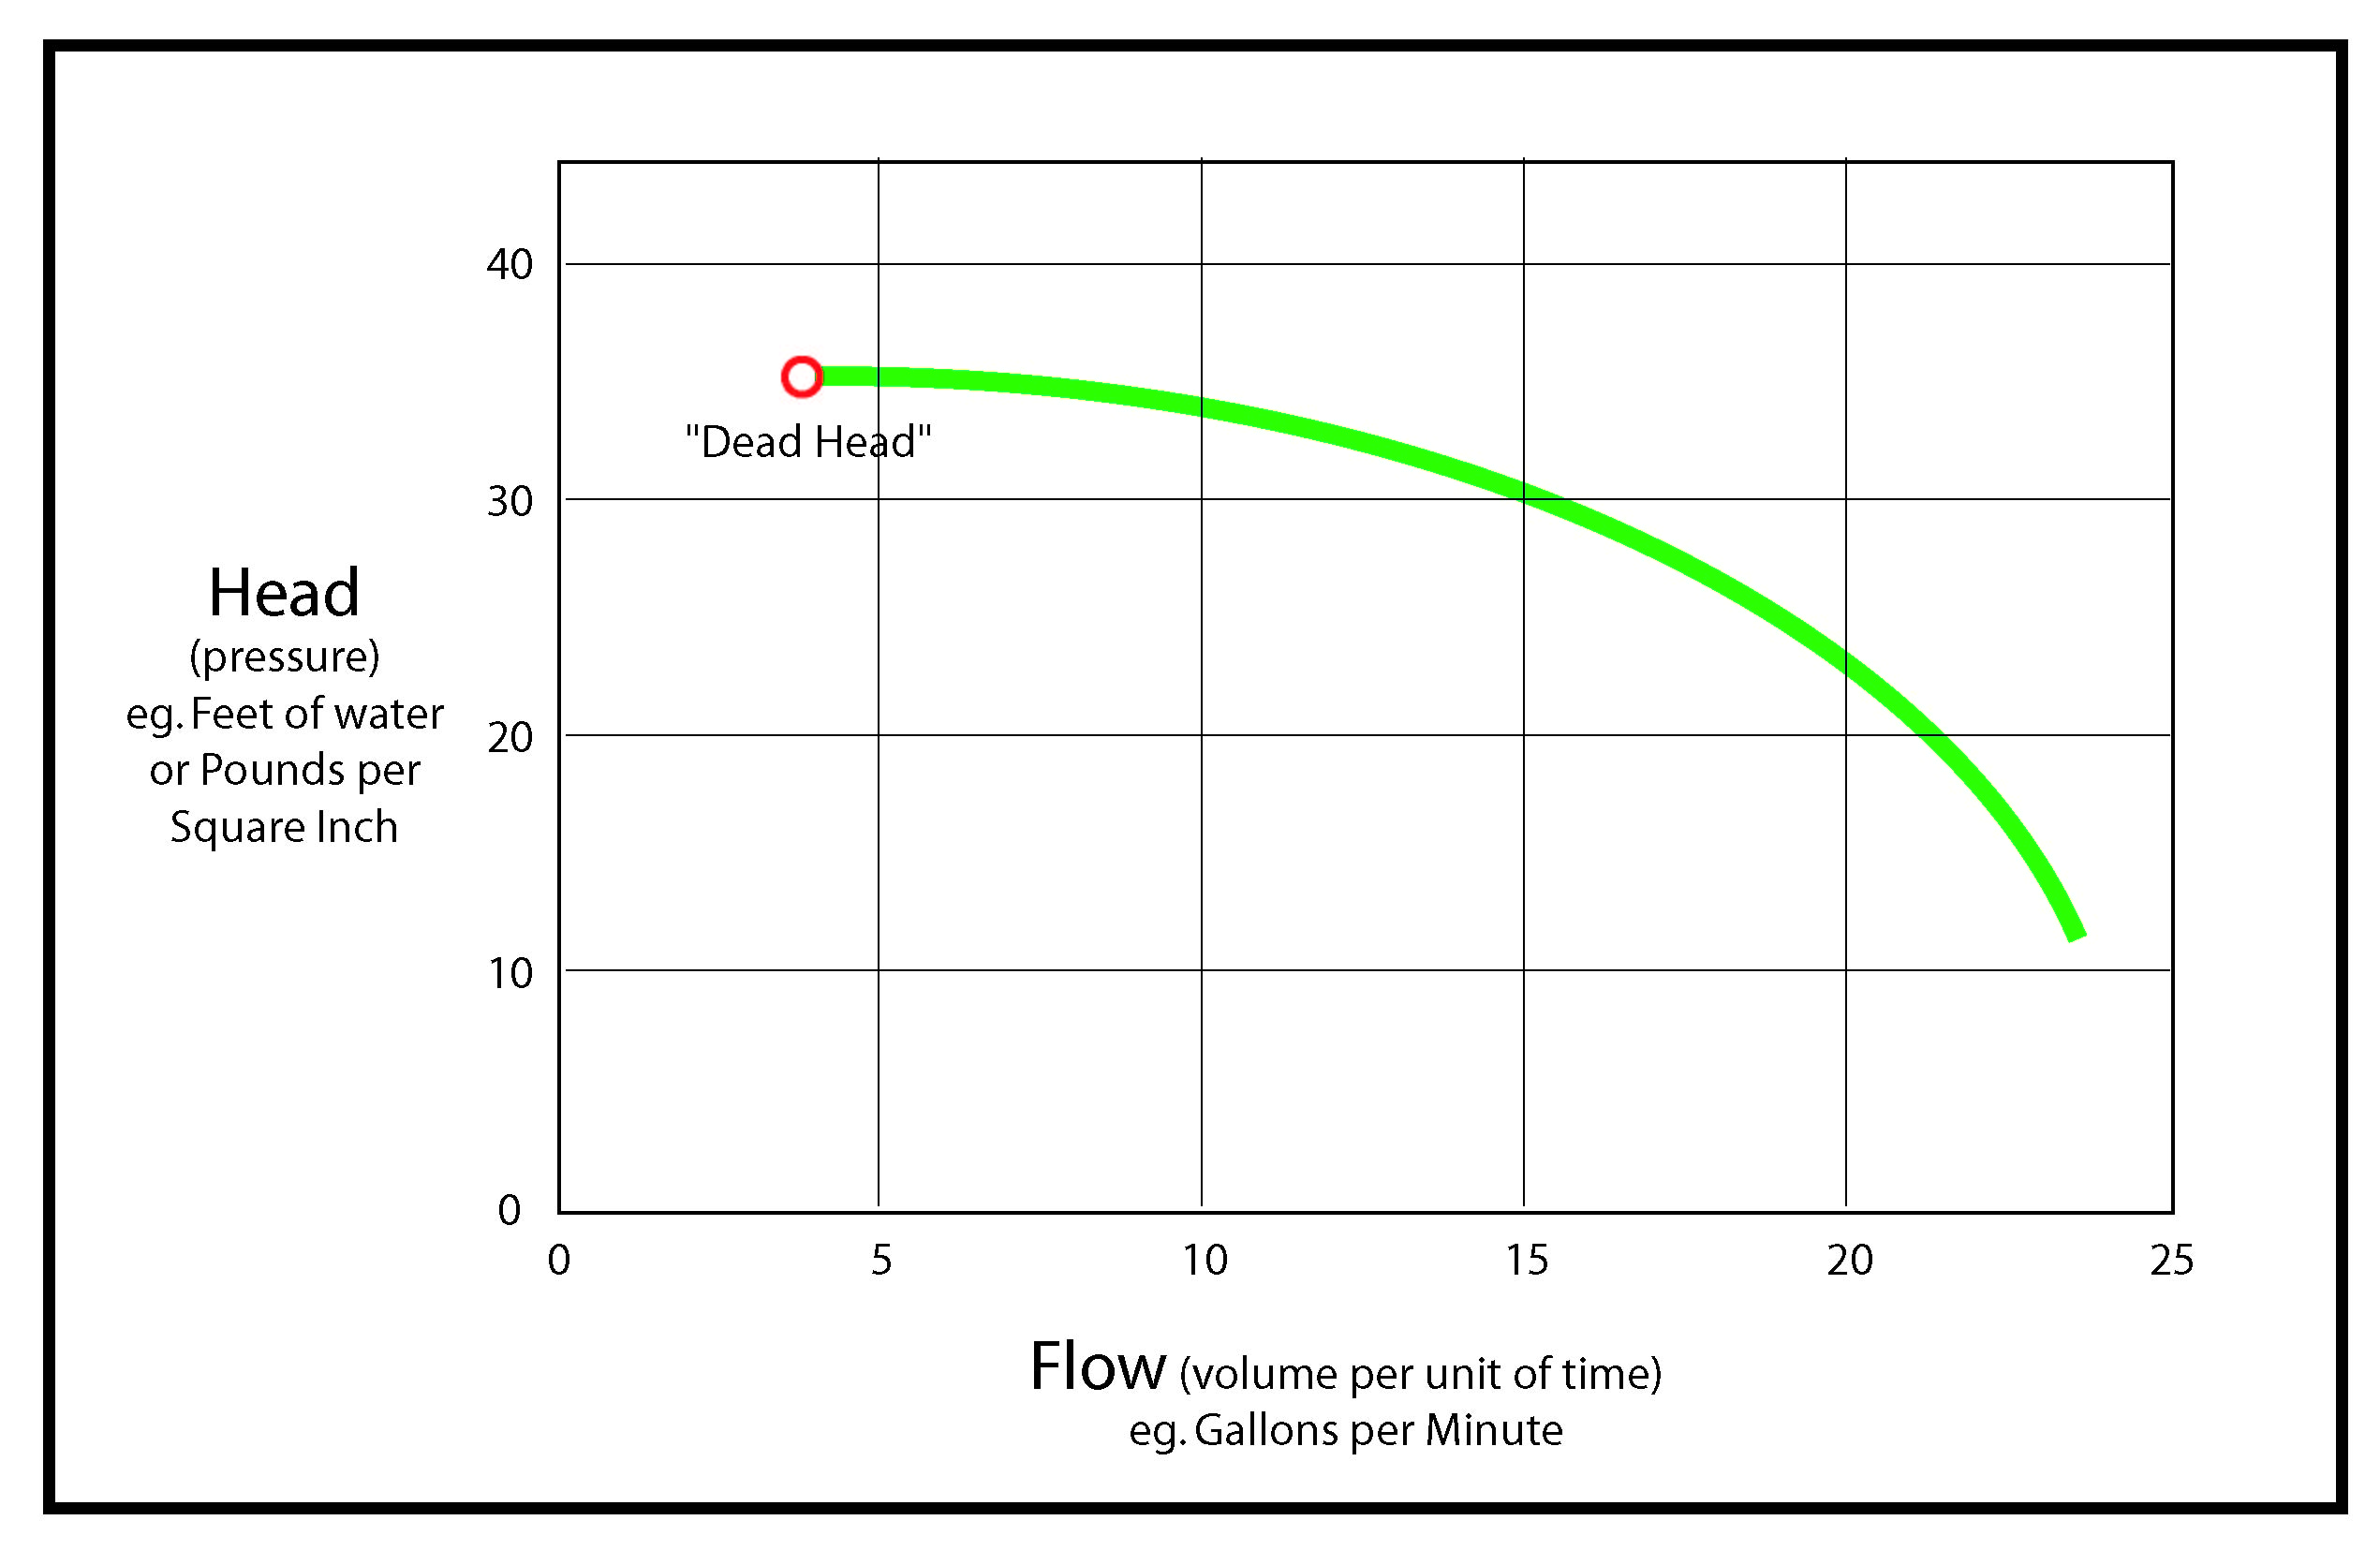 Pump Curve Chart